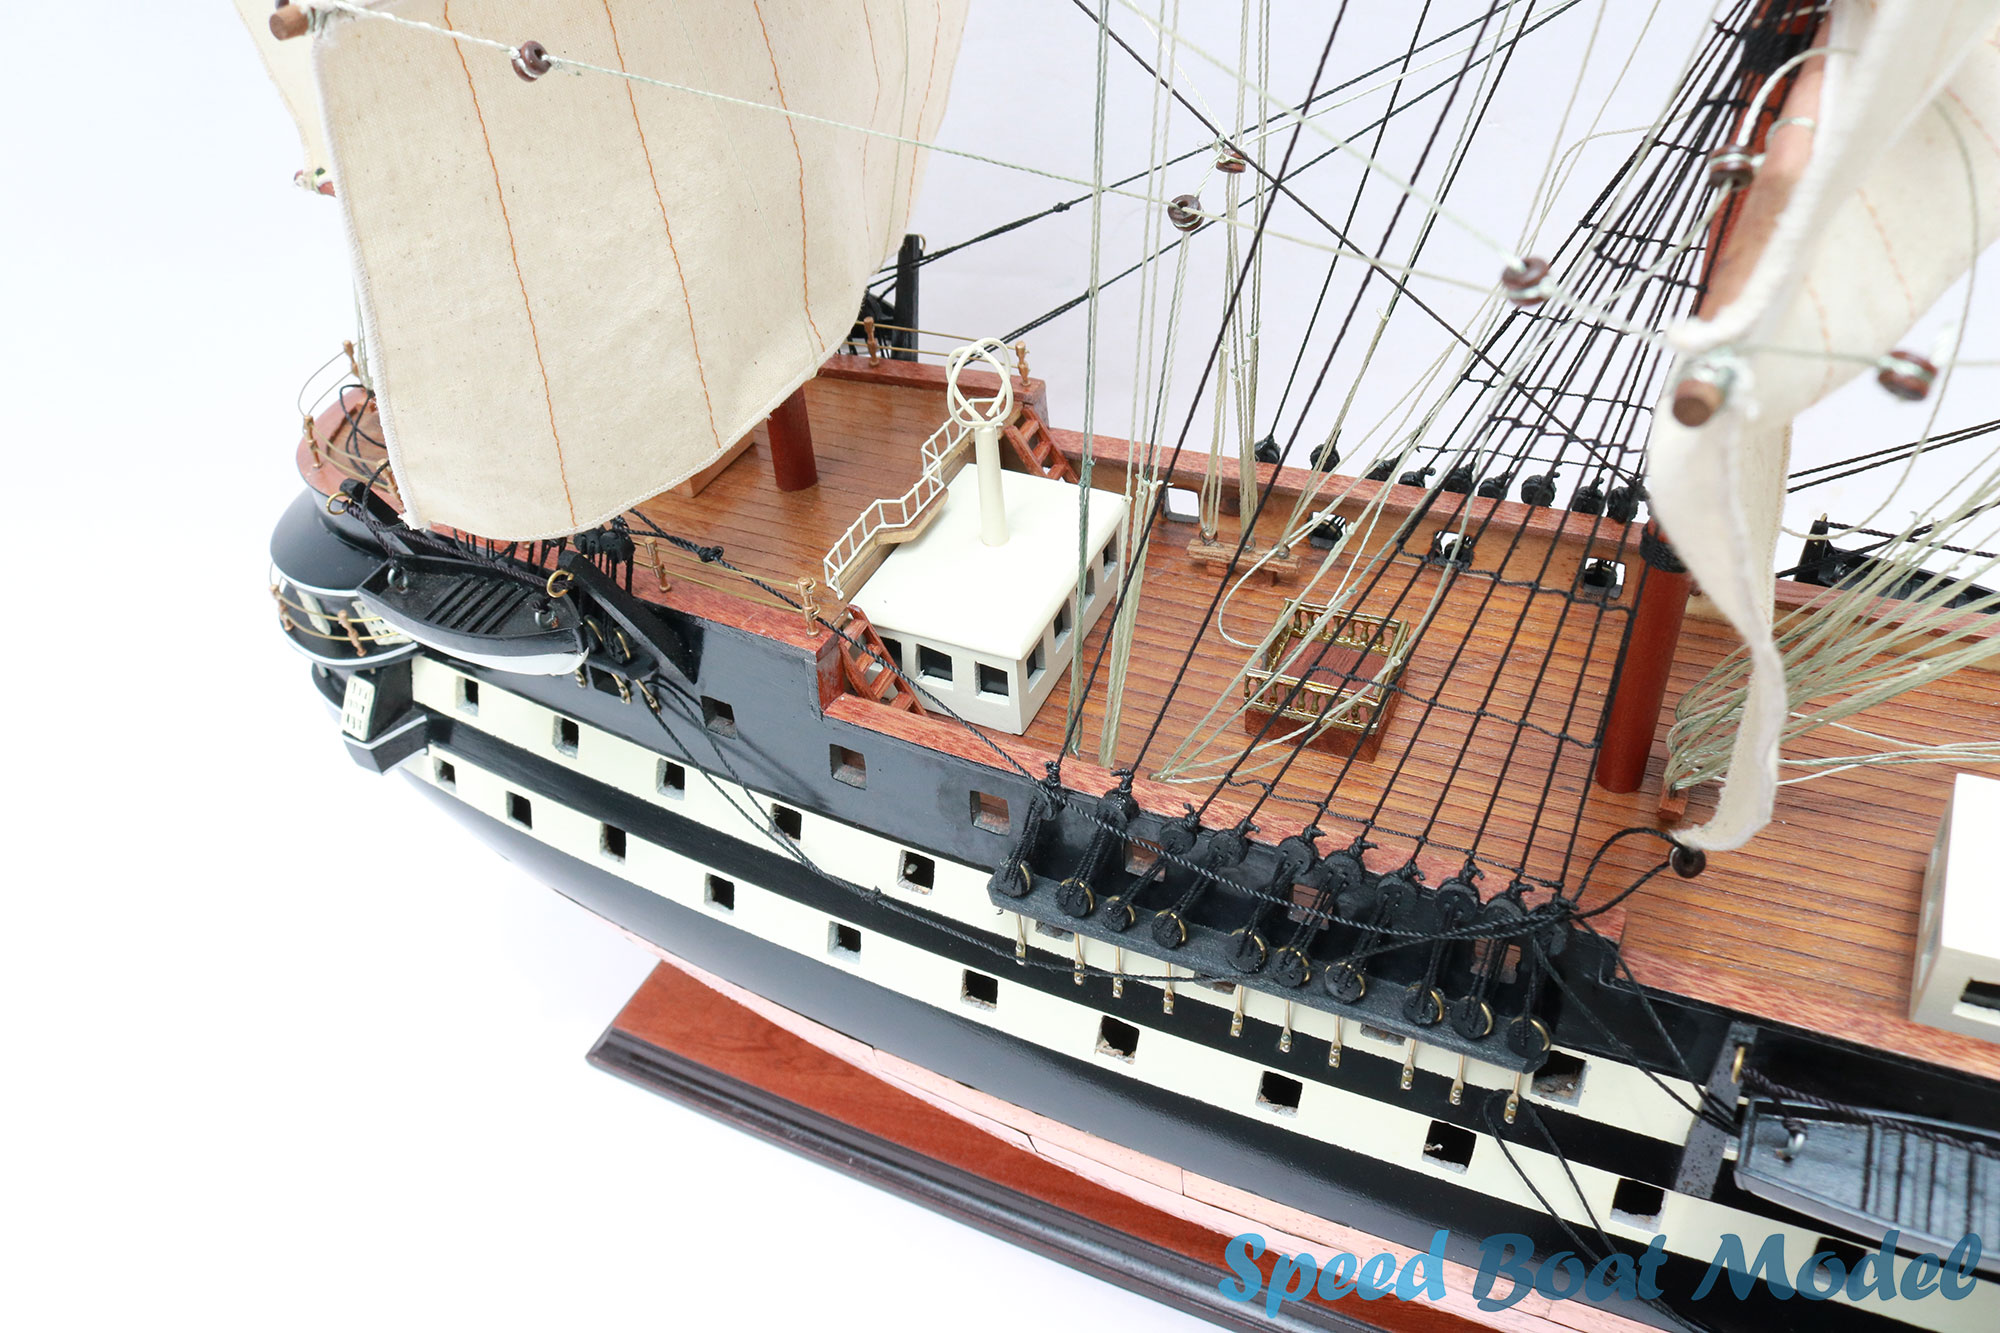 Hms Conway Tall Ship Model 31.4"/ 37.7"